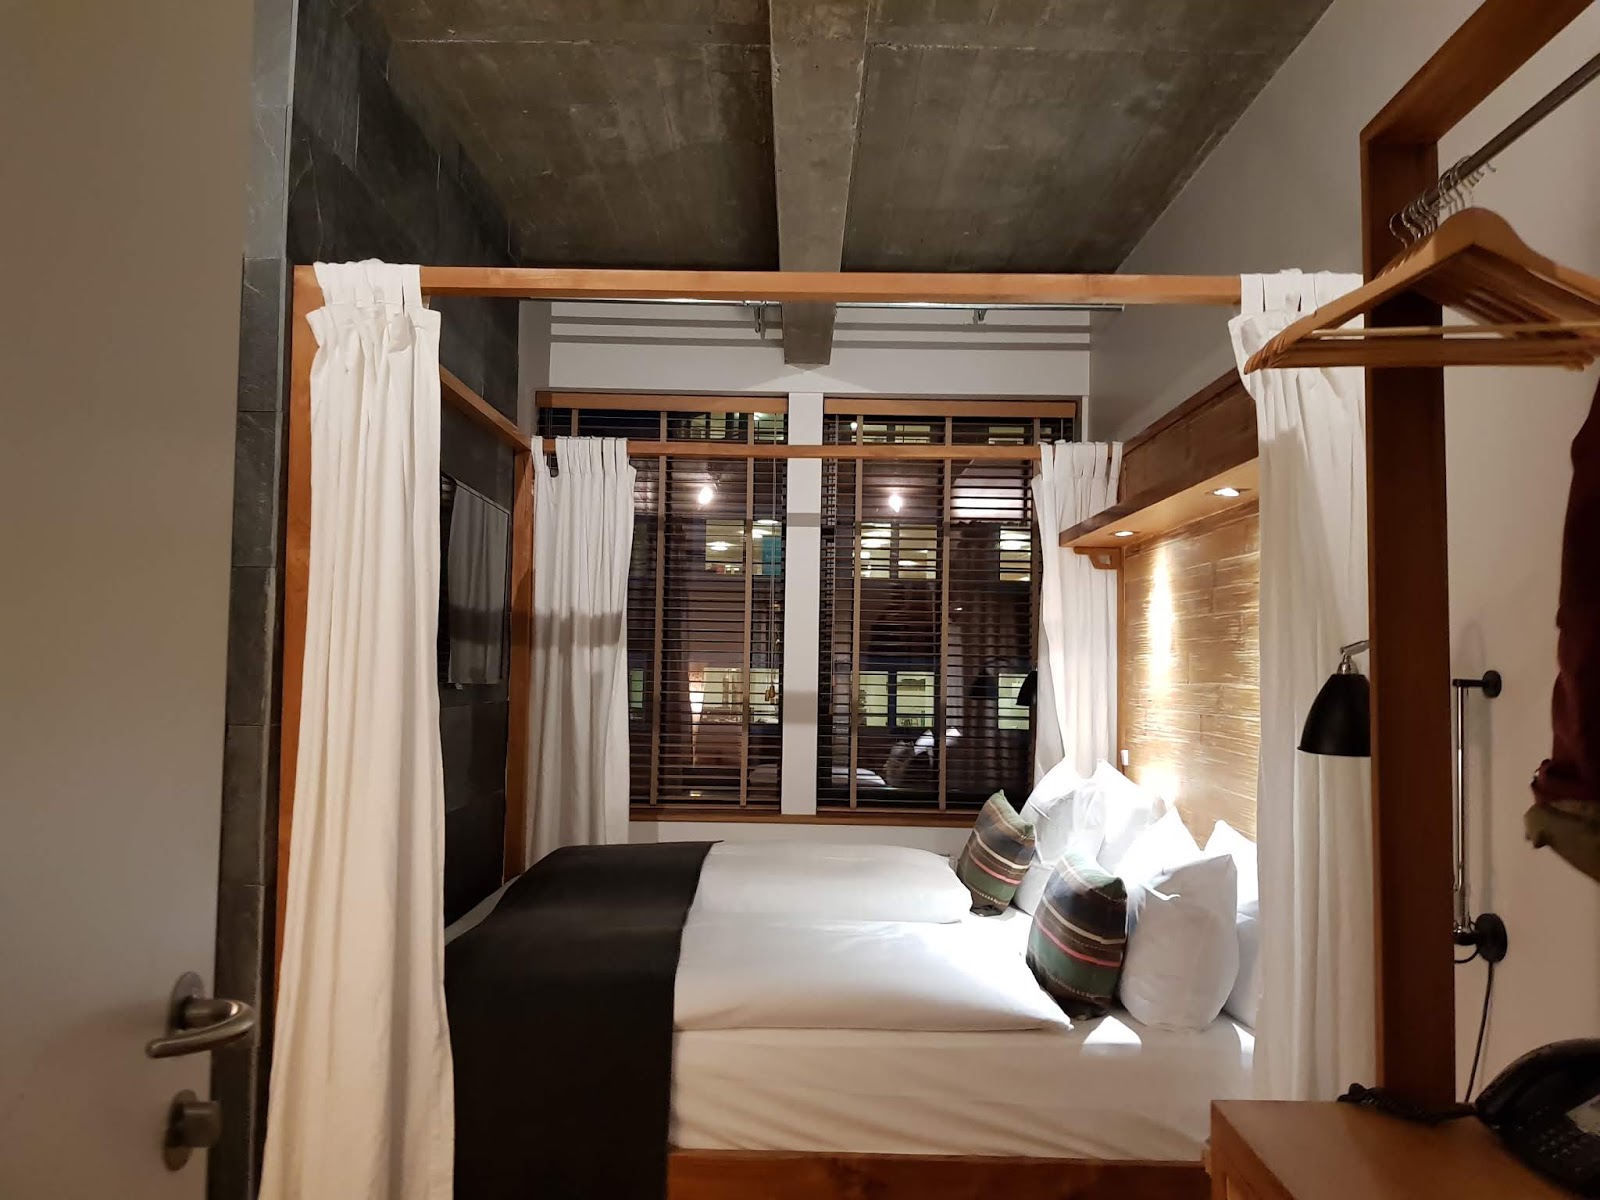 Manon Les Suites Hotel Room Review - Best eco hotels in Copenhagen - Vegan travel blogger Copenhagen Guide